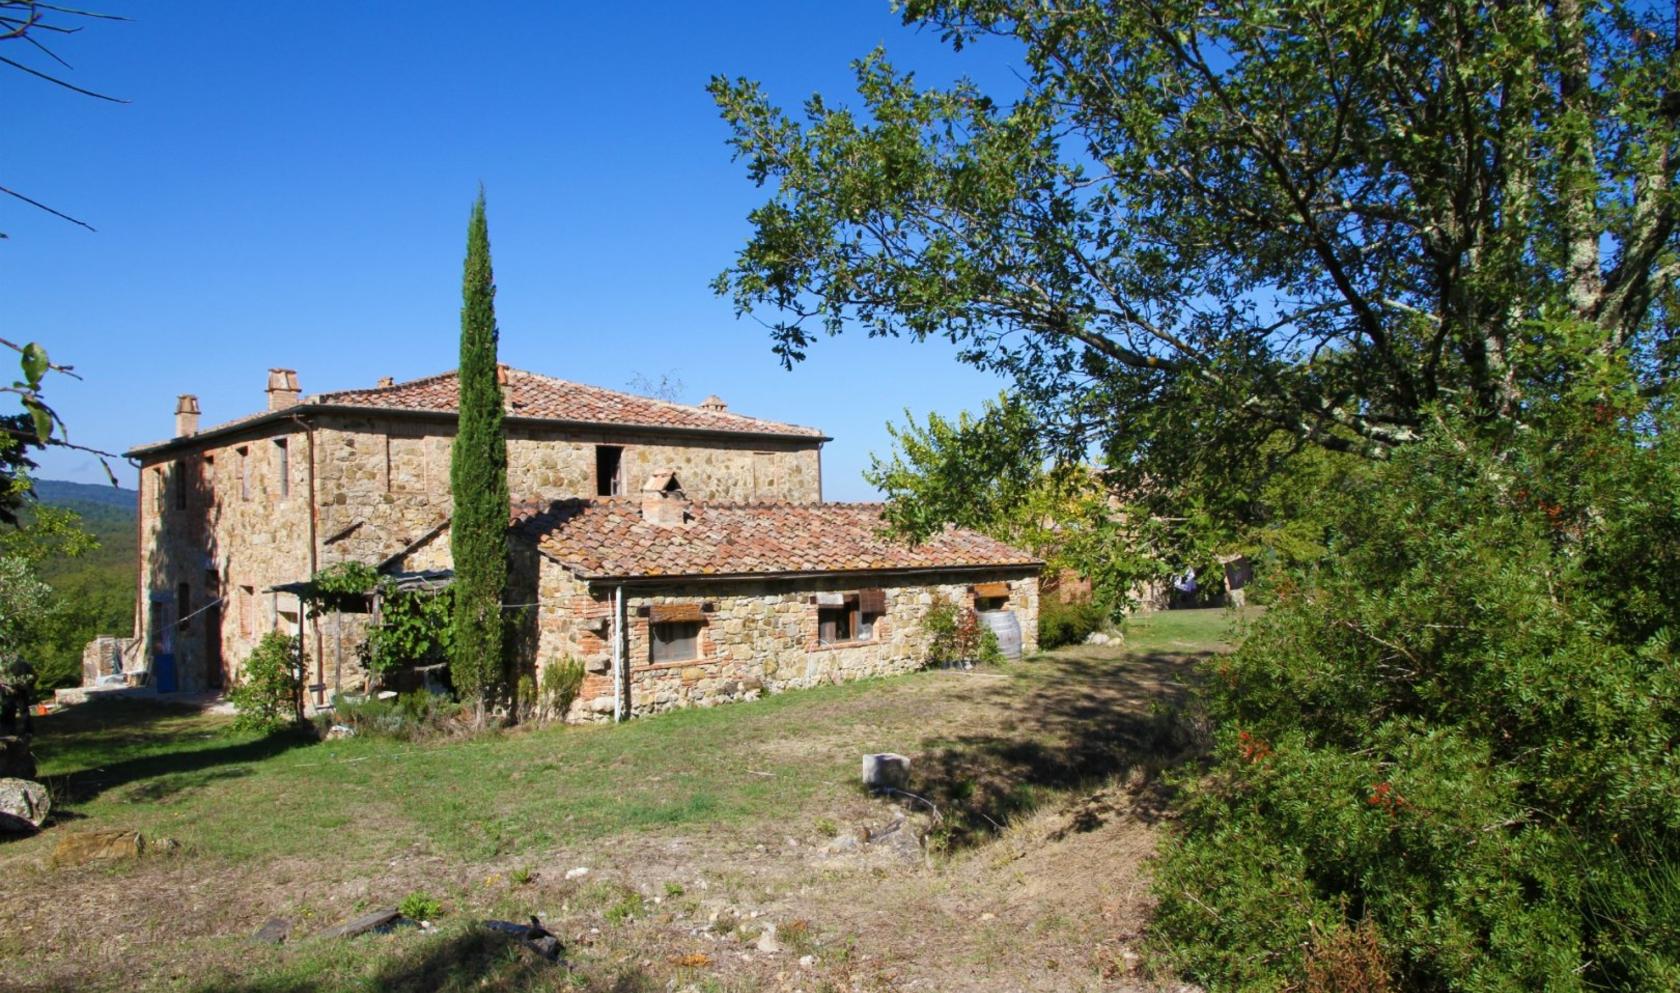 Toscana Immobiliare - Property for sale in Montalcino, Tuscany, Siena